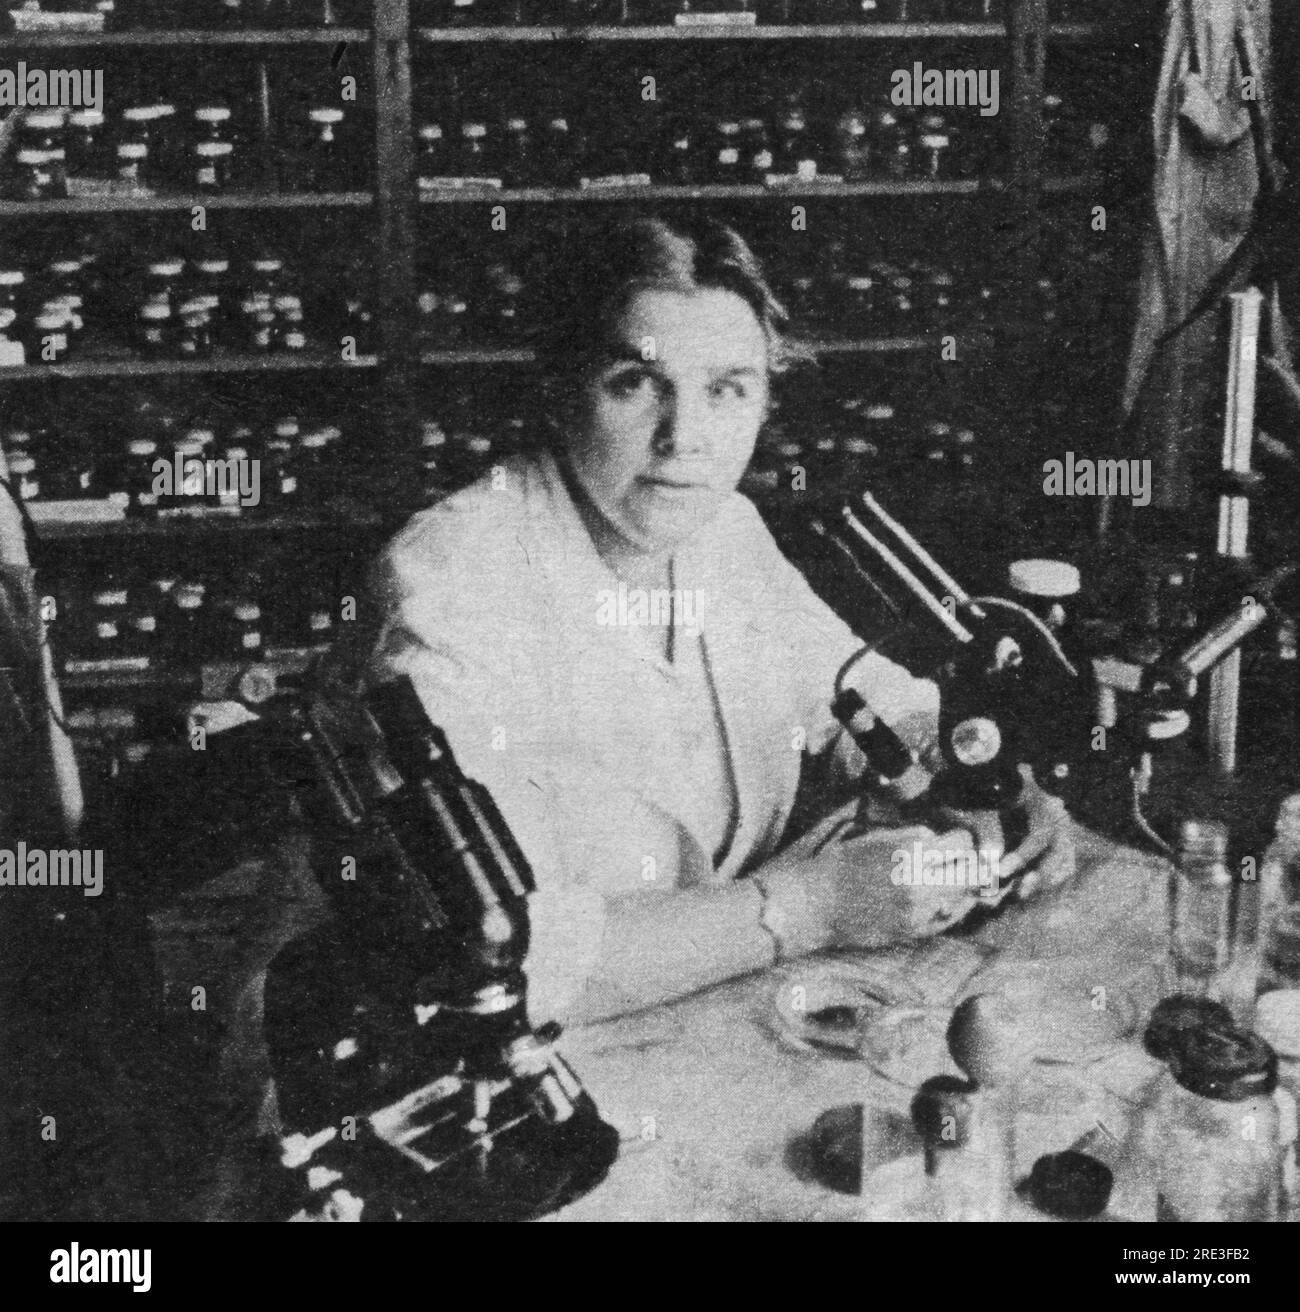 Vinogradova, Evdokia Viktorovna 'Dusja', 1.8.1914 - 7.9.1962, Soviet weaver and engineer, ADDITIONAL-RIGHTS-CLEARANCE-INFO-NOT-AVAILABLE Stock Photo